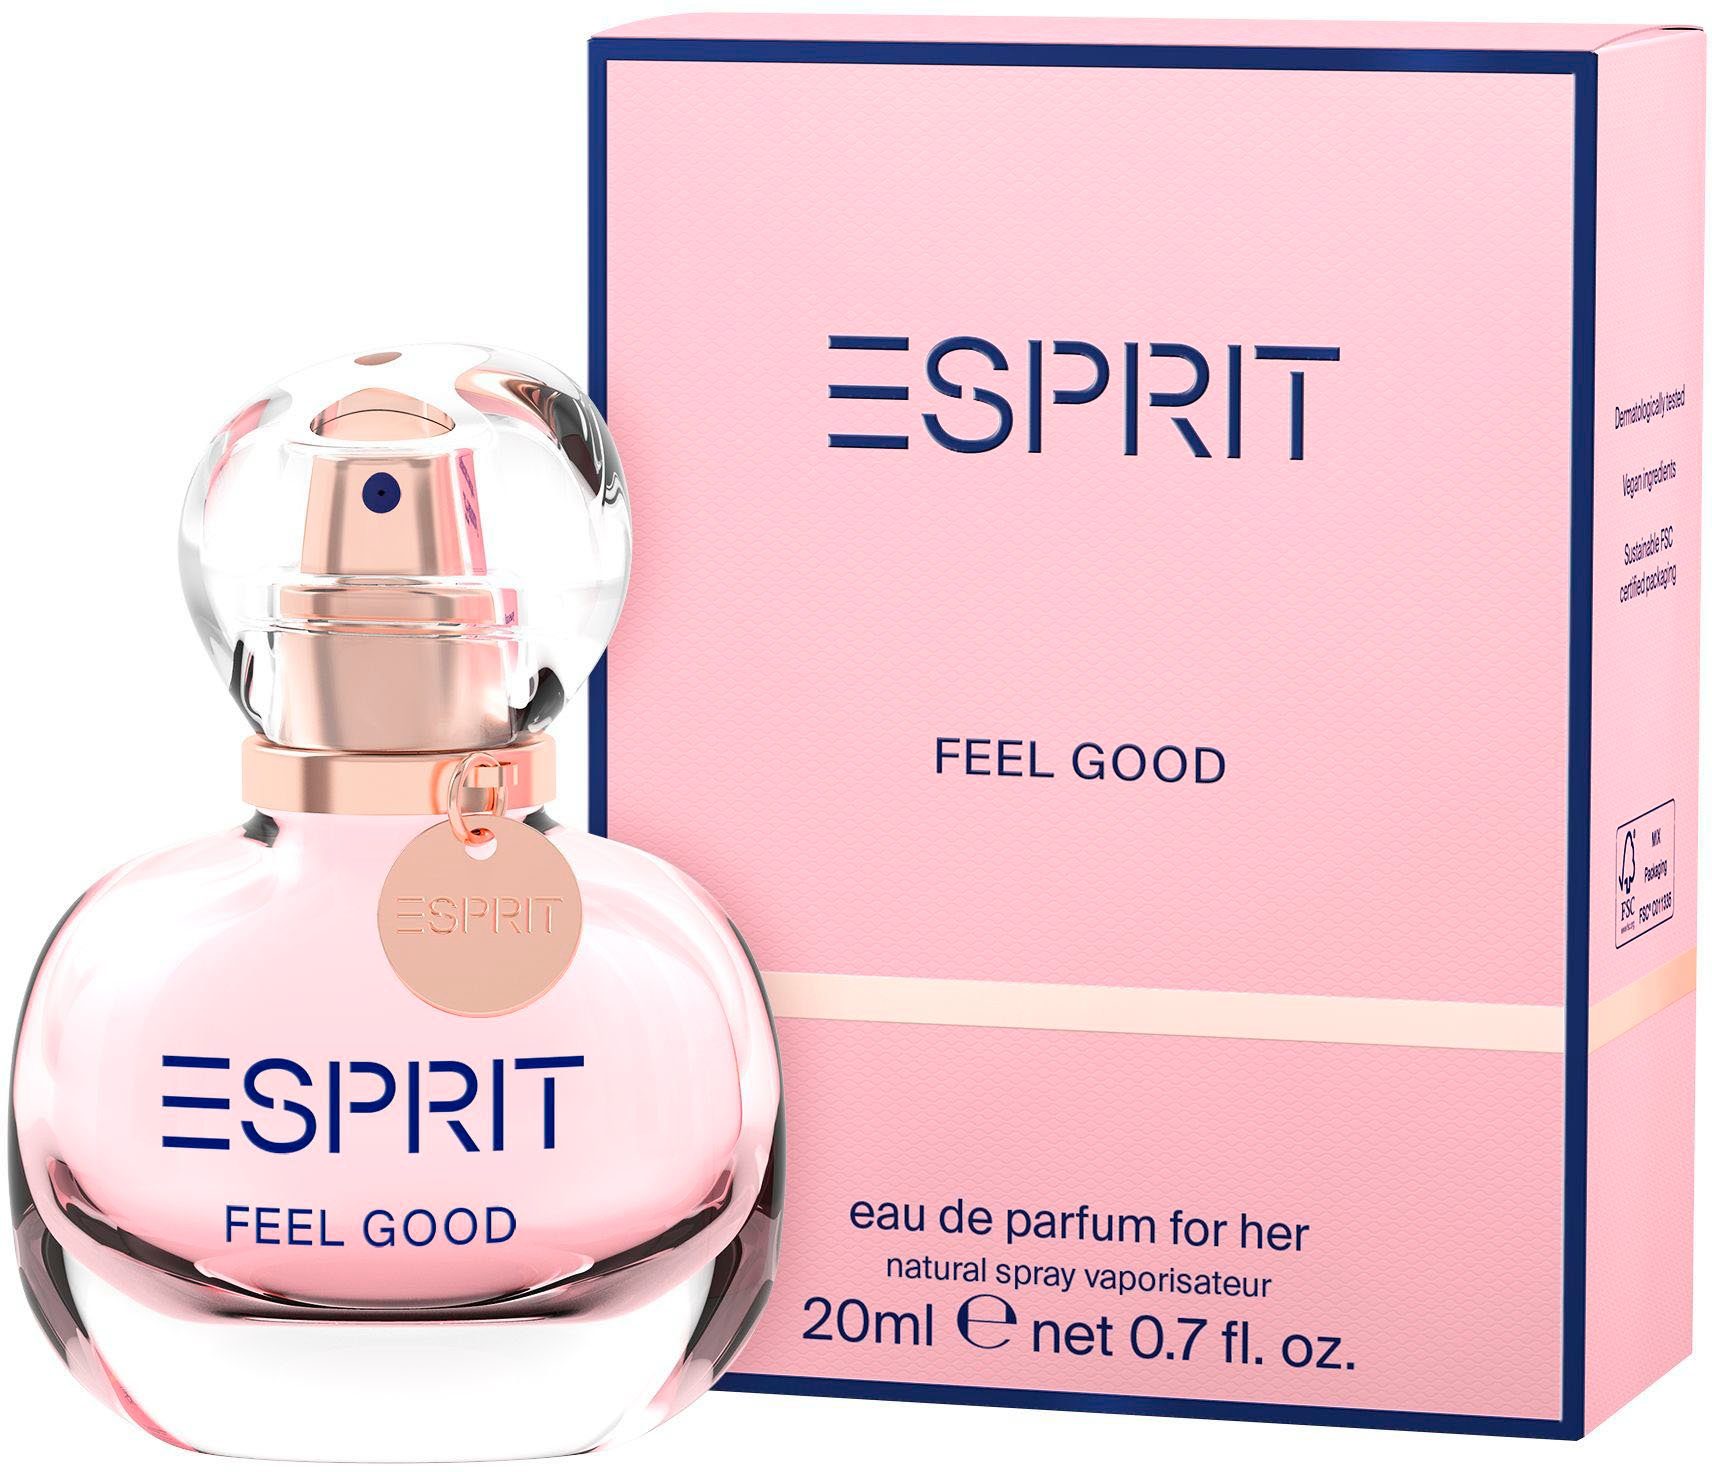 GOOD Parfum for Esprit 20 Eau EdP FEEL de ml her